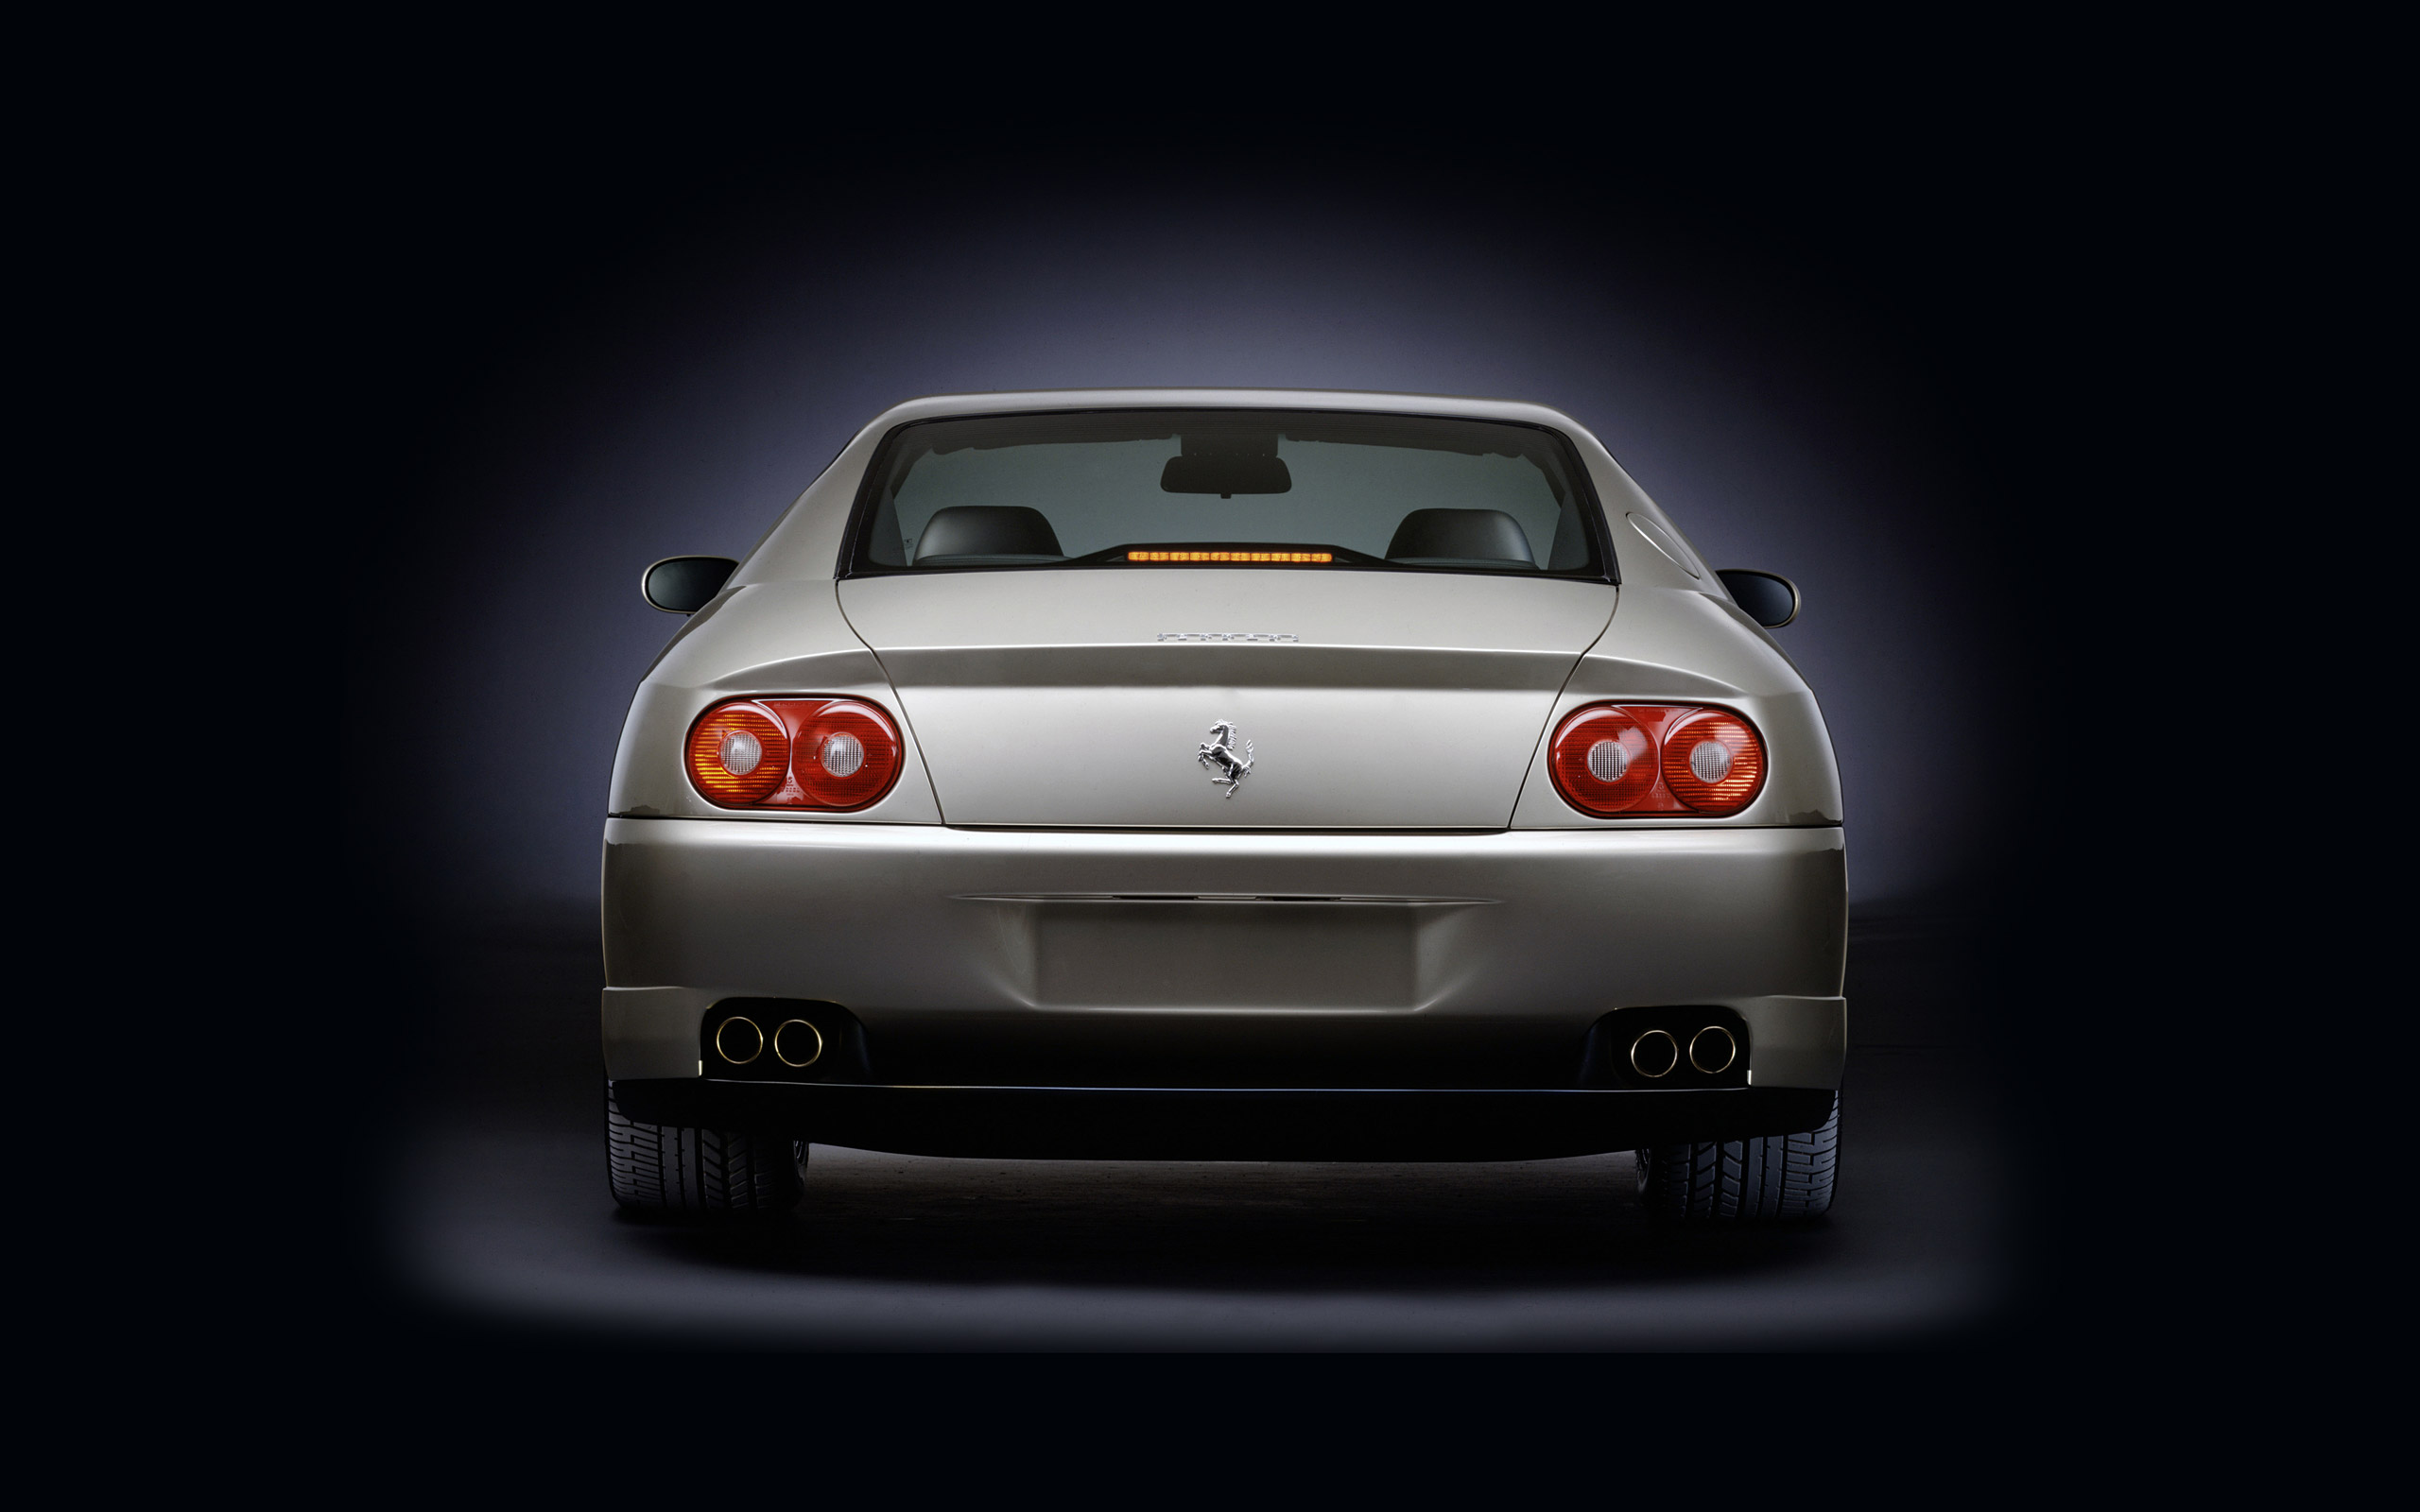  2001 Ferrari 456M GT Wallpaper.